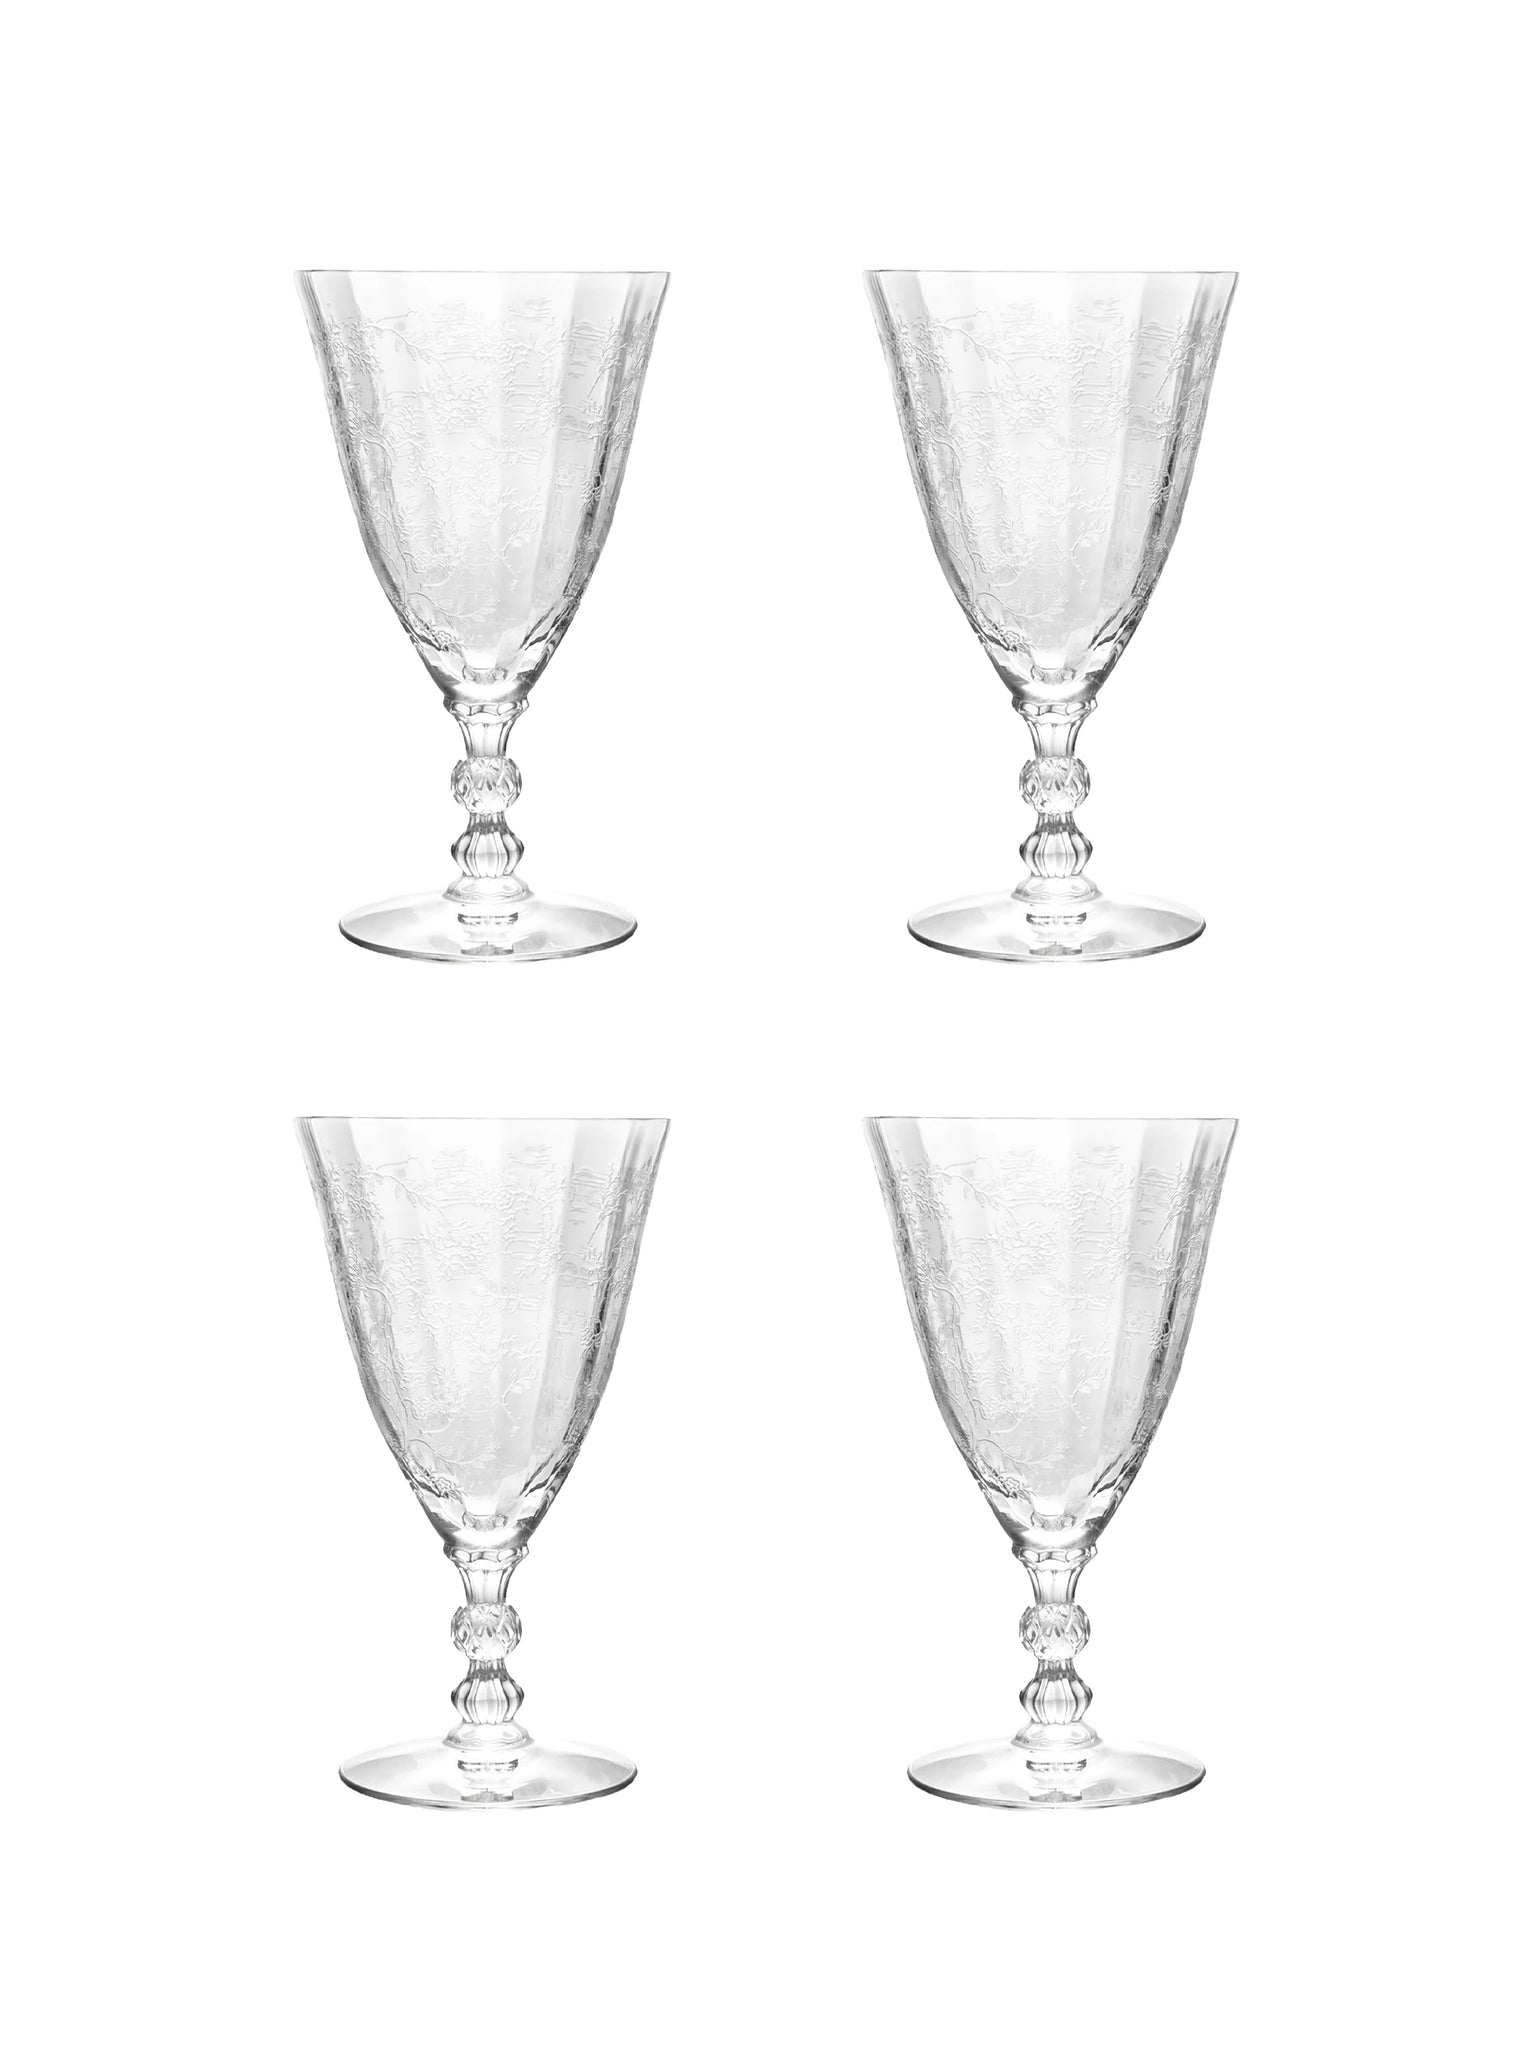 Vintage 1940s Fostoria Crystal Glasses Set of Four